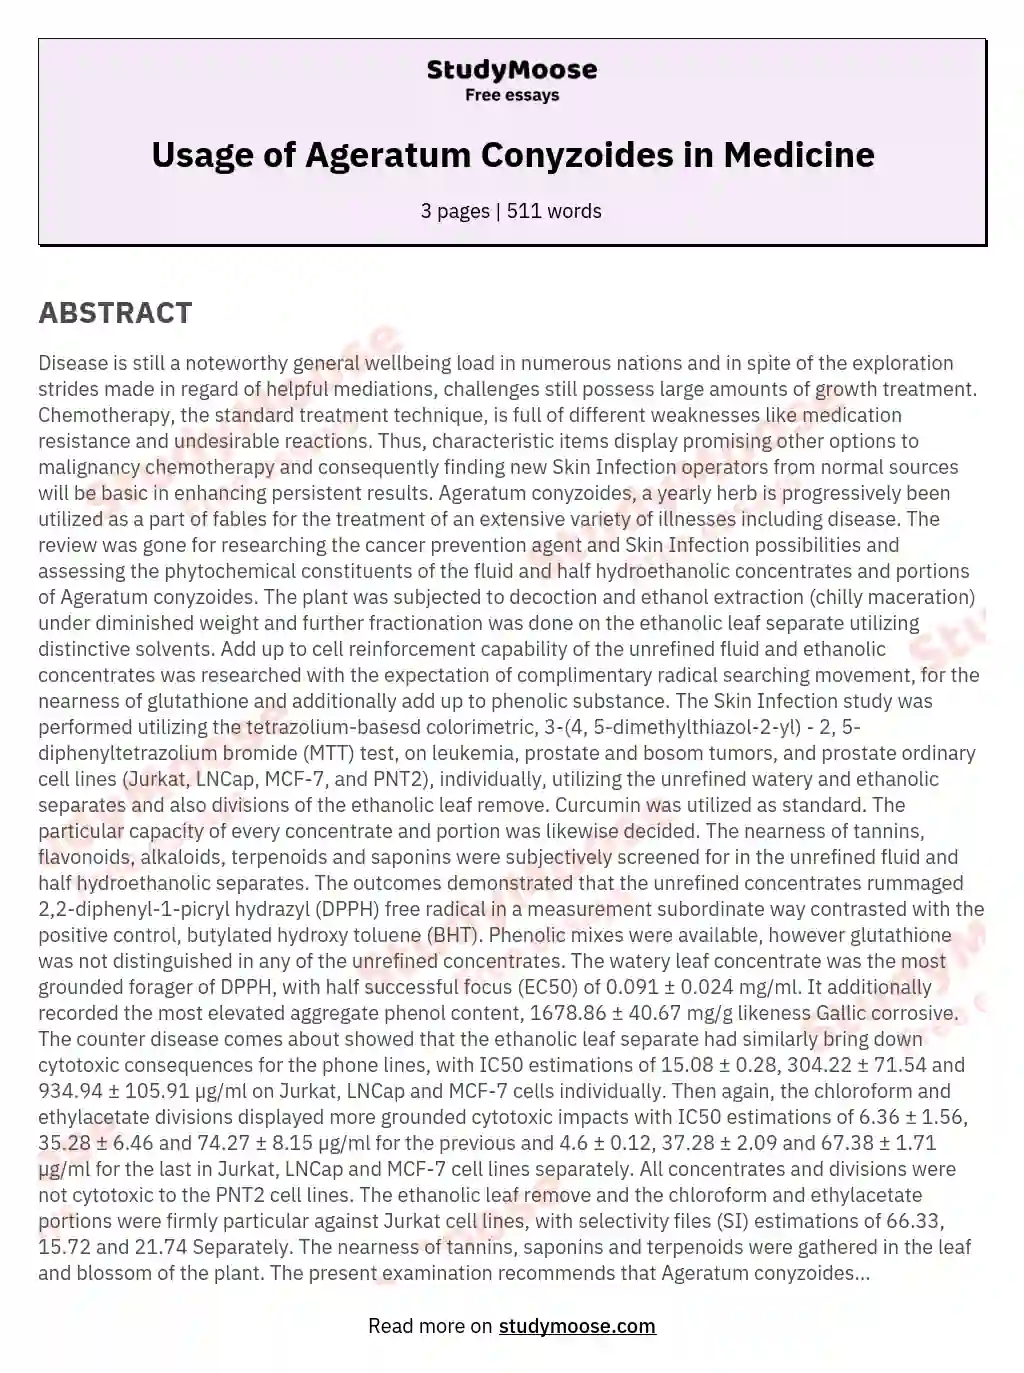 Usage of Ageratum Conyzoides in Medicine essay